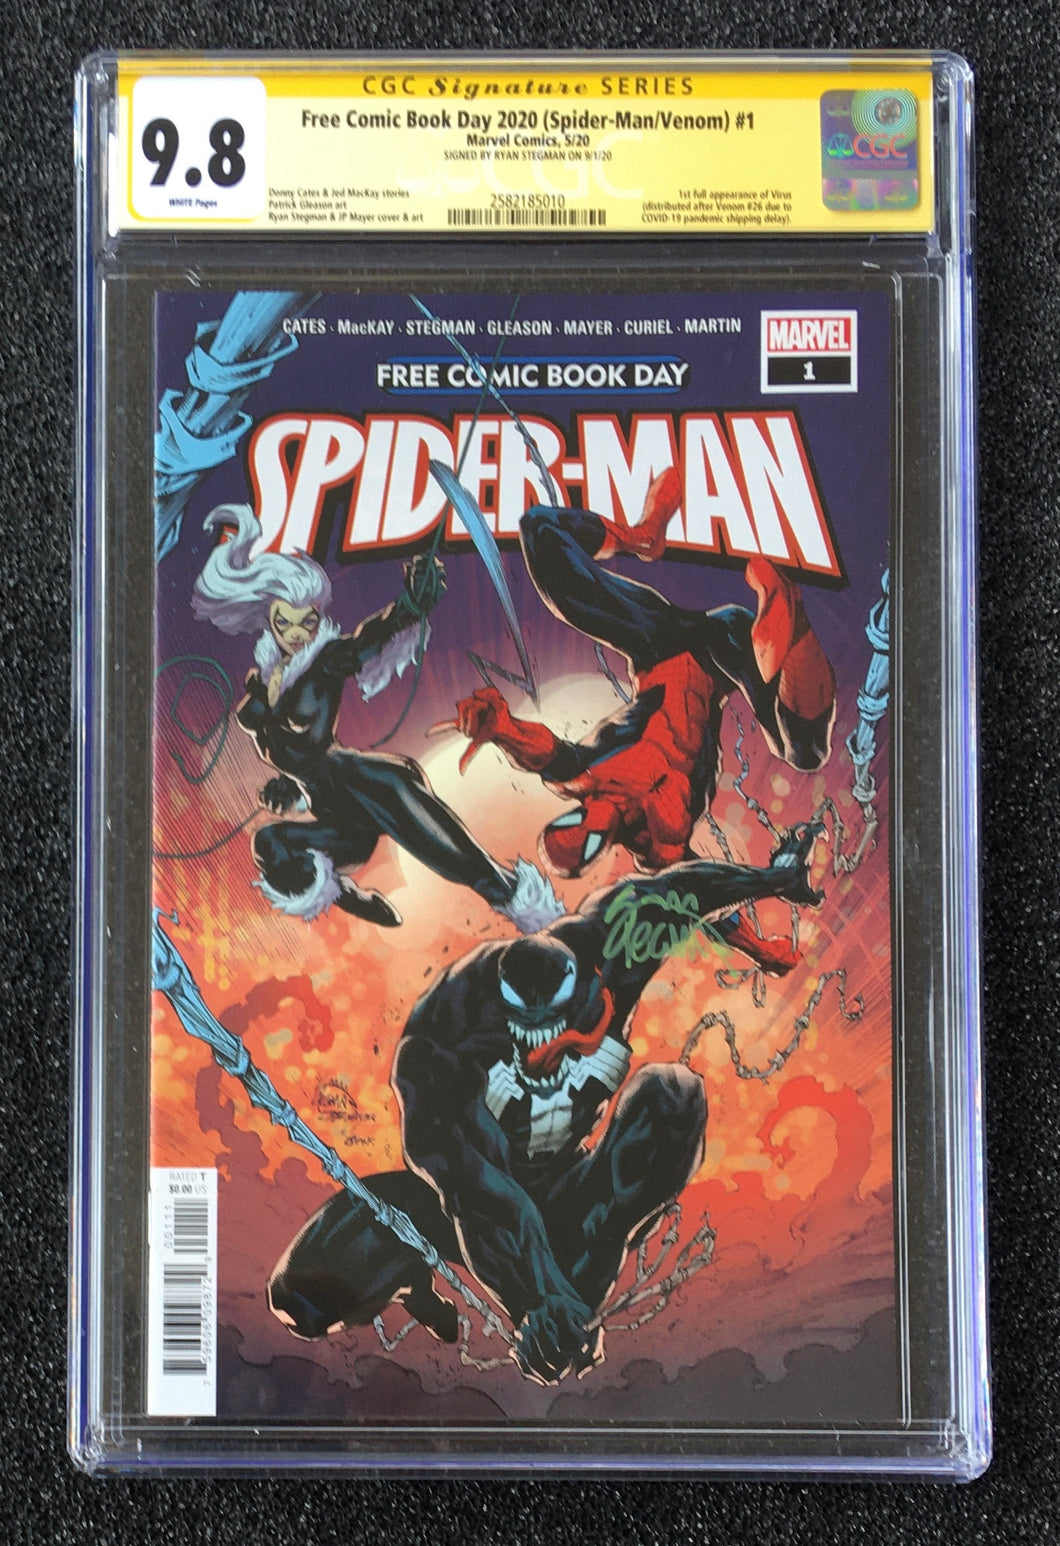 CGC 9.8 SS Stegman Free Comic Book Day 2020 (Spider-Man/Venom) FCBD # 1